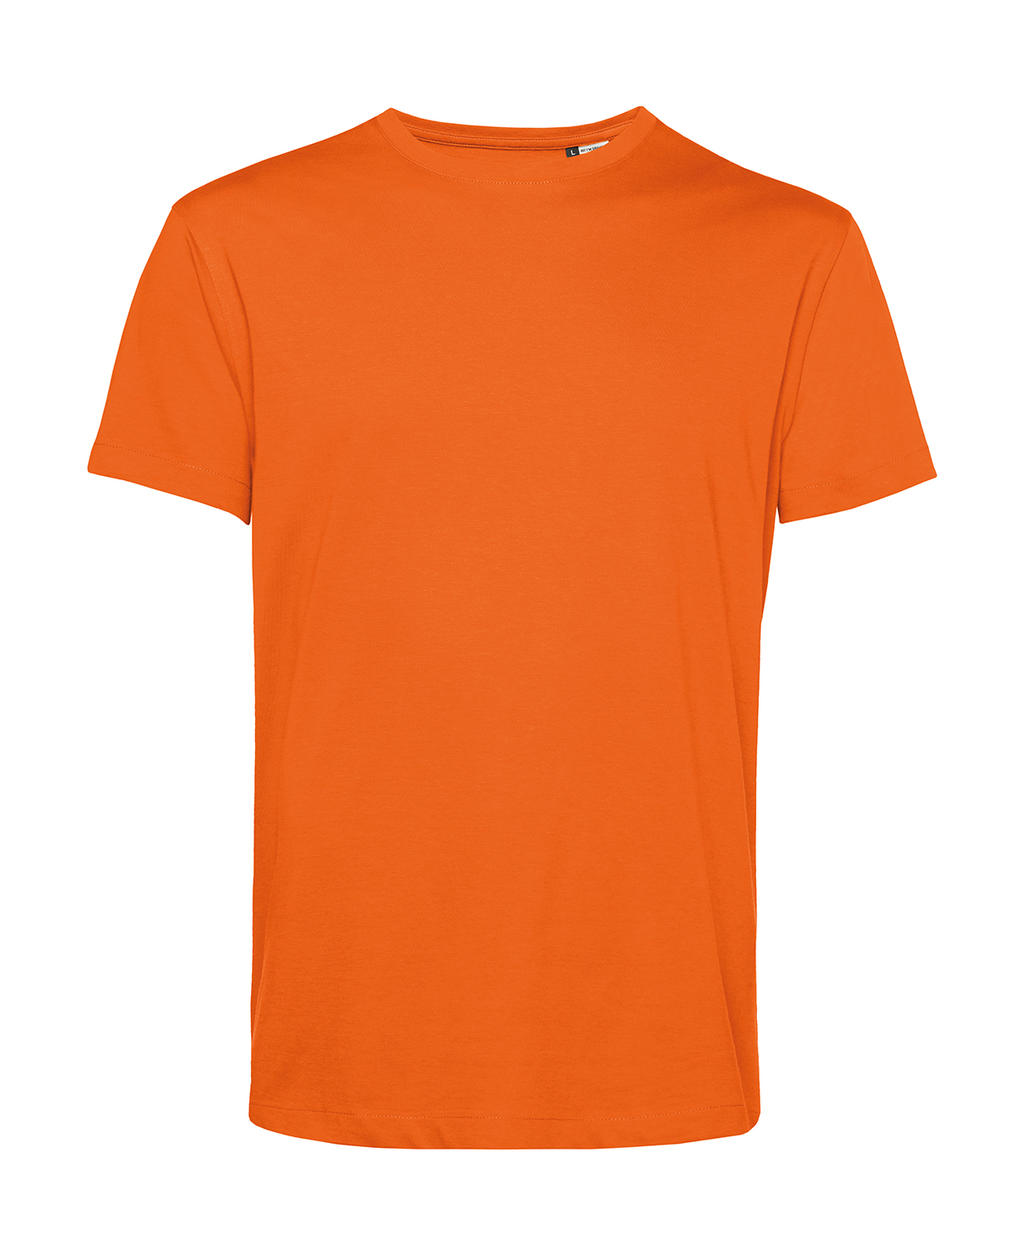 Tričko BC Organic Inspire E150 - oranžové, M